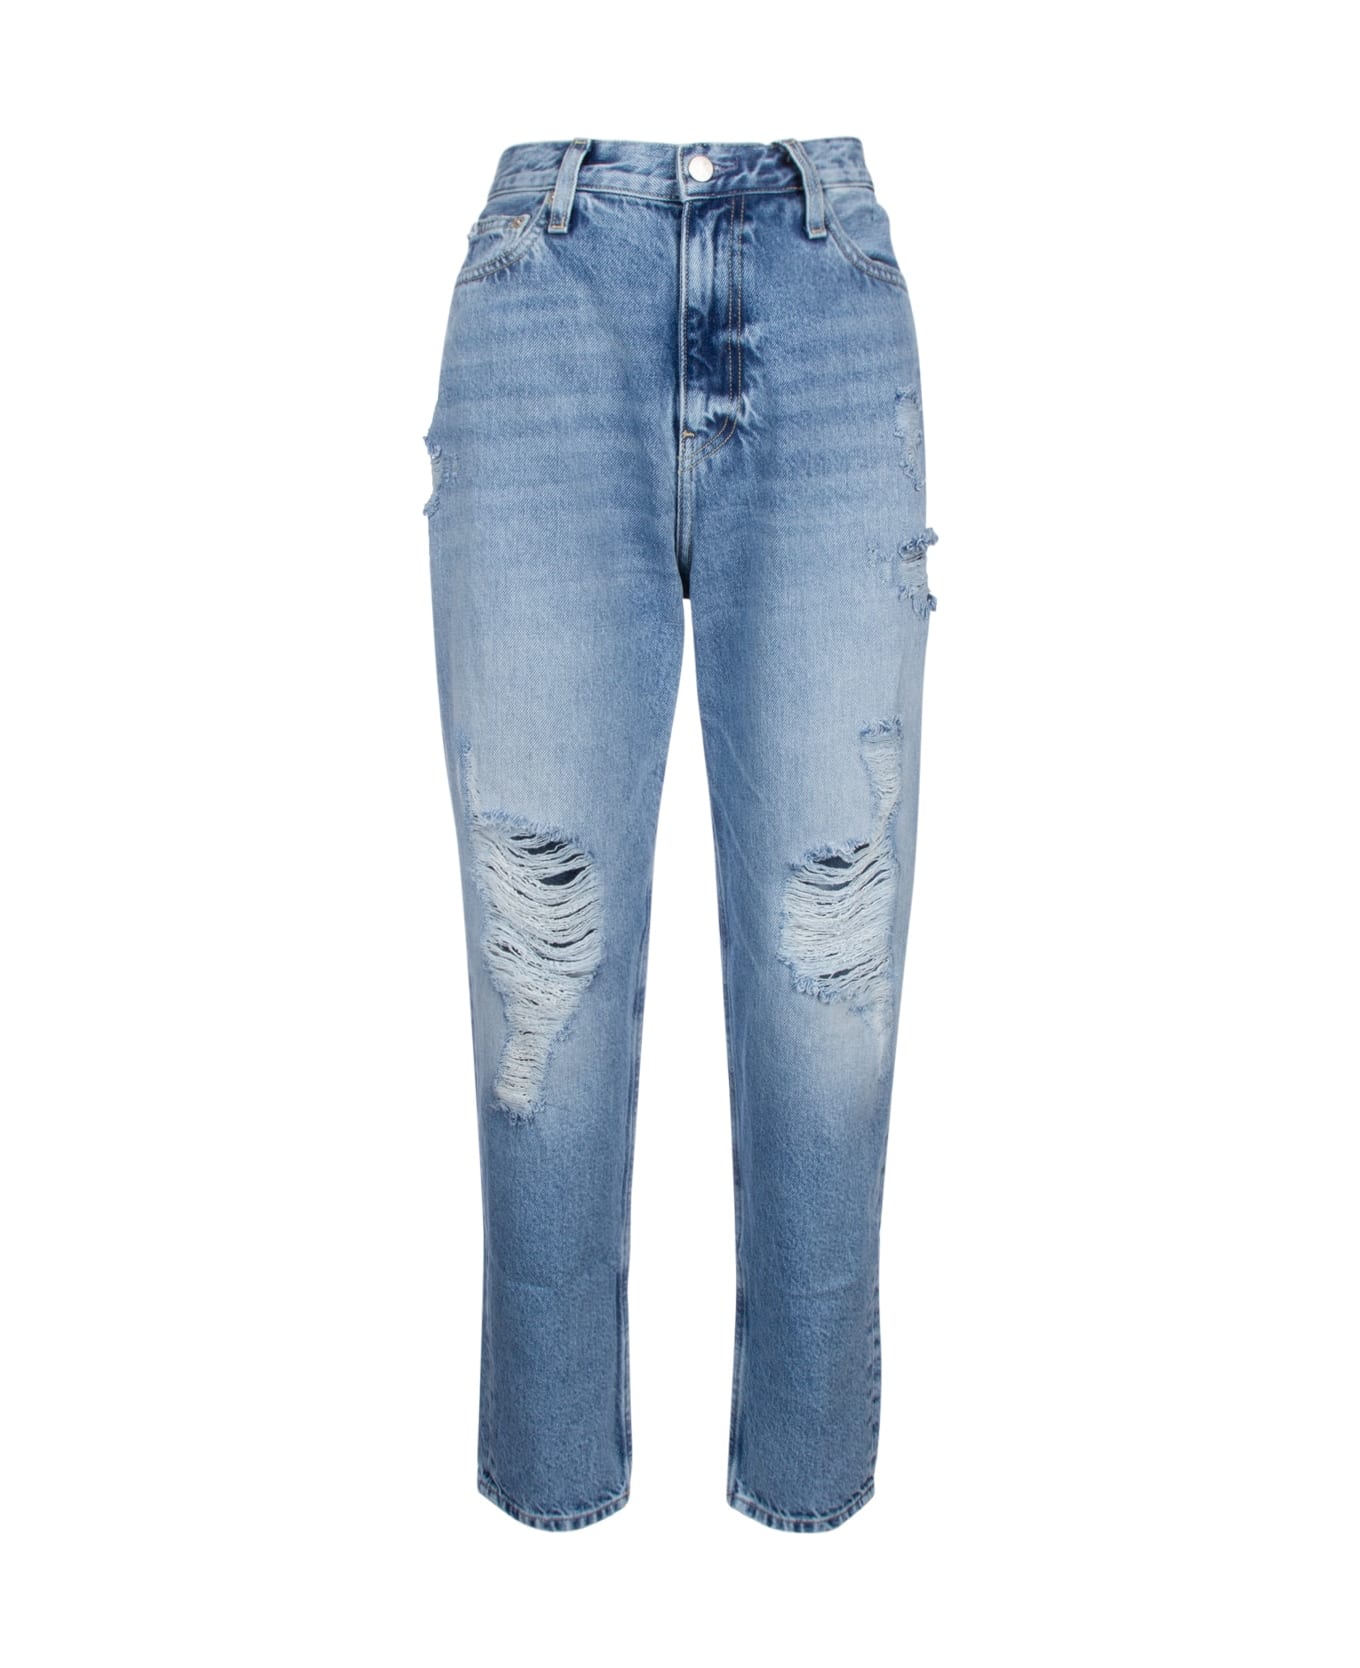 Calvin Klein Jeans Jeans - 1A4 デニム